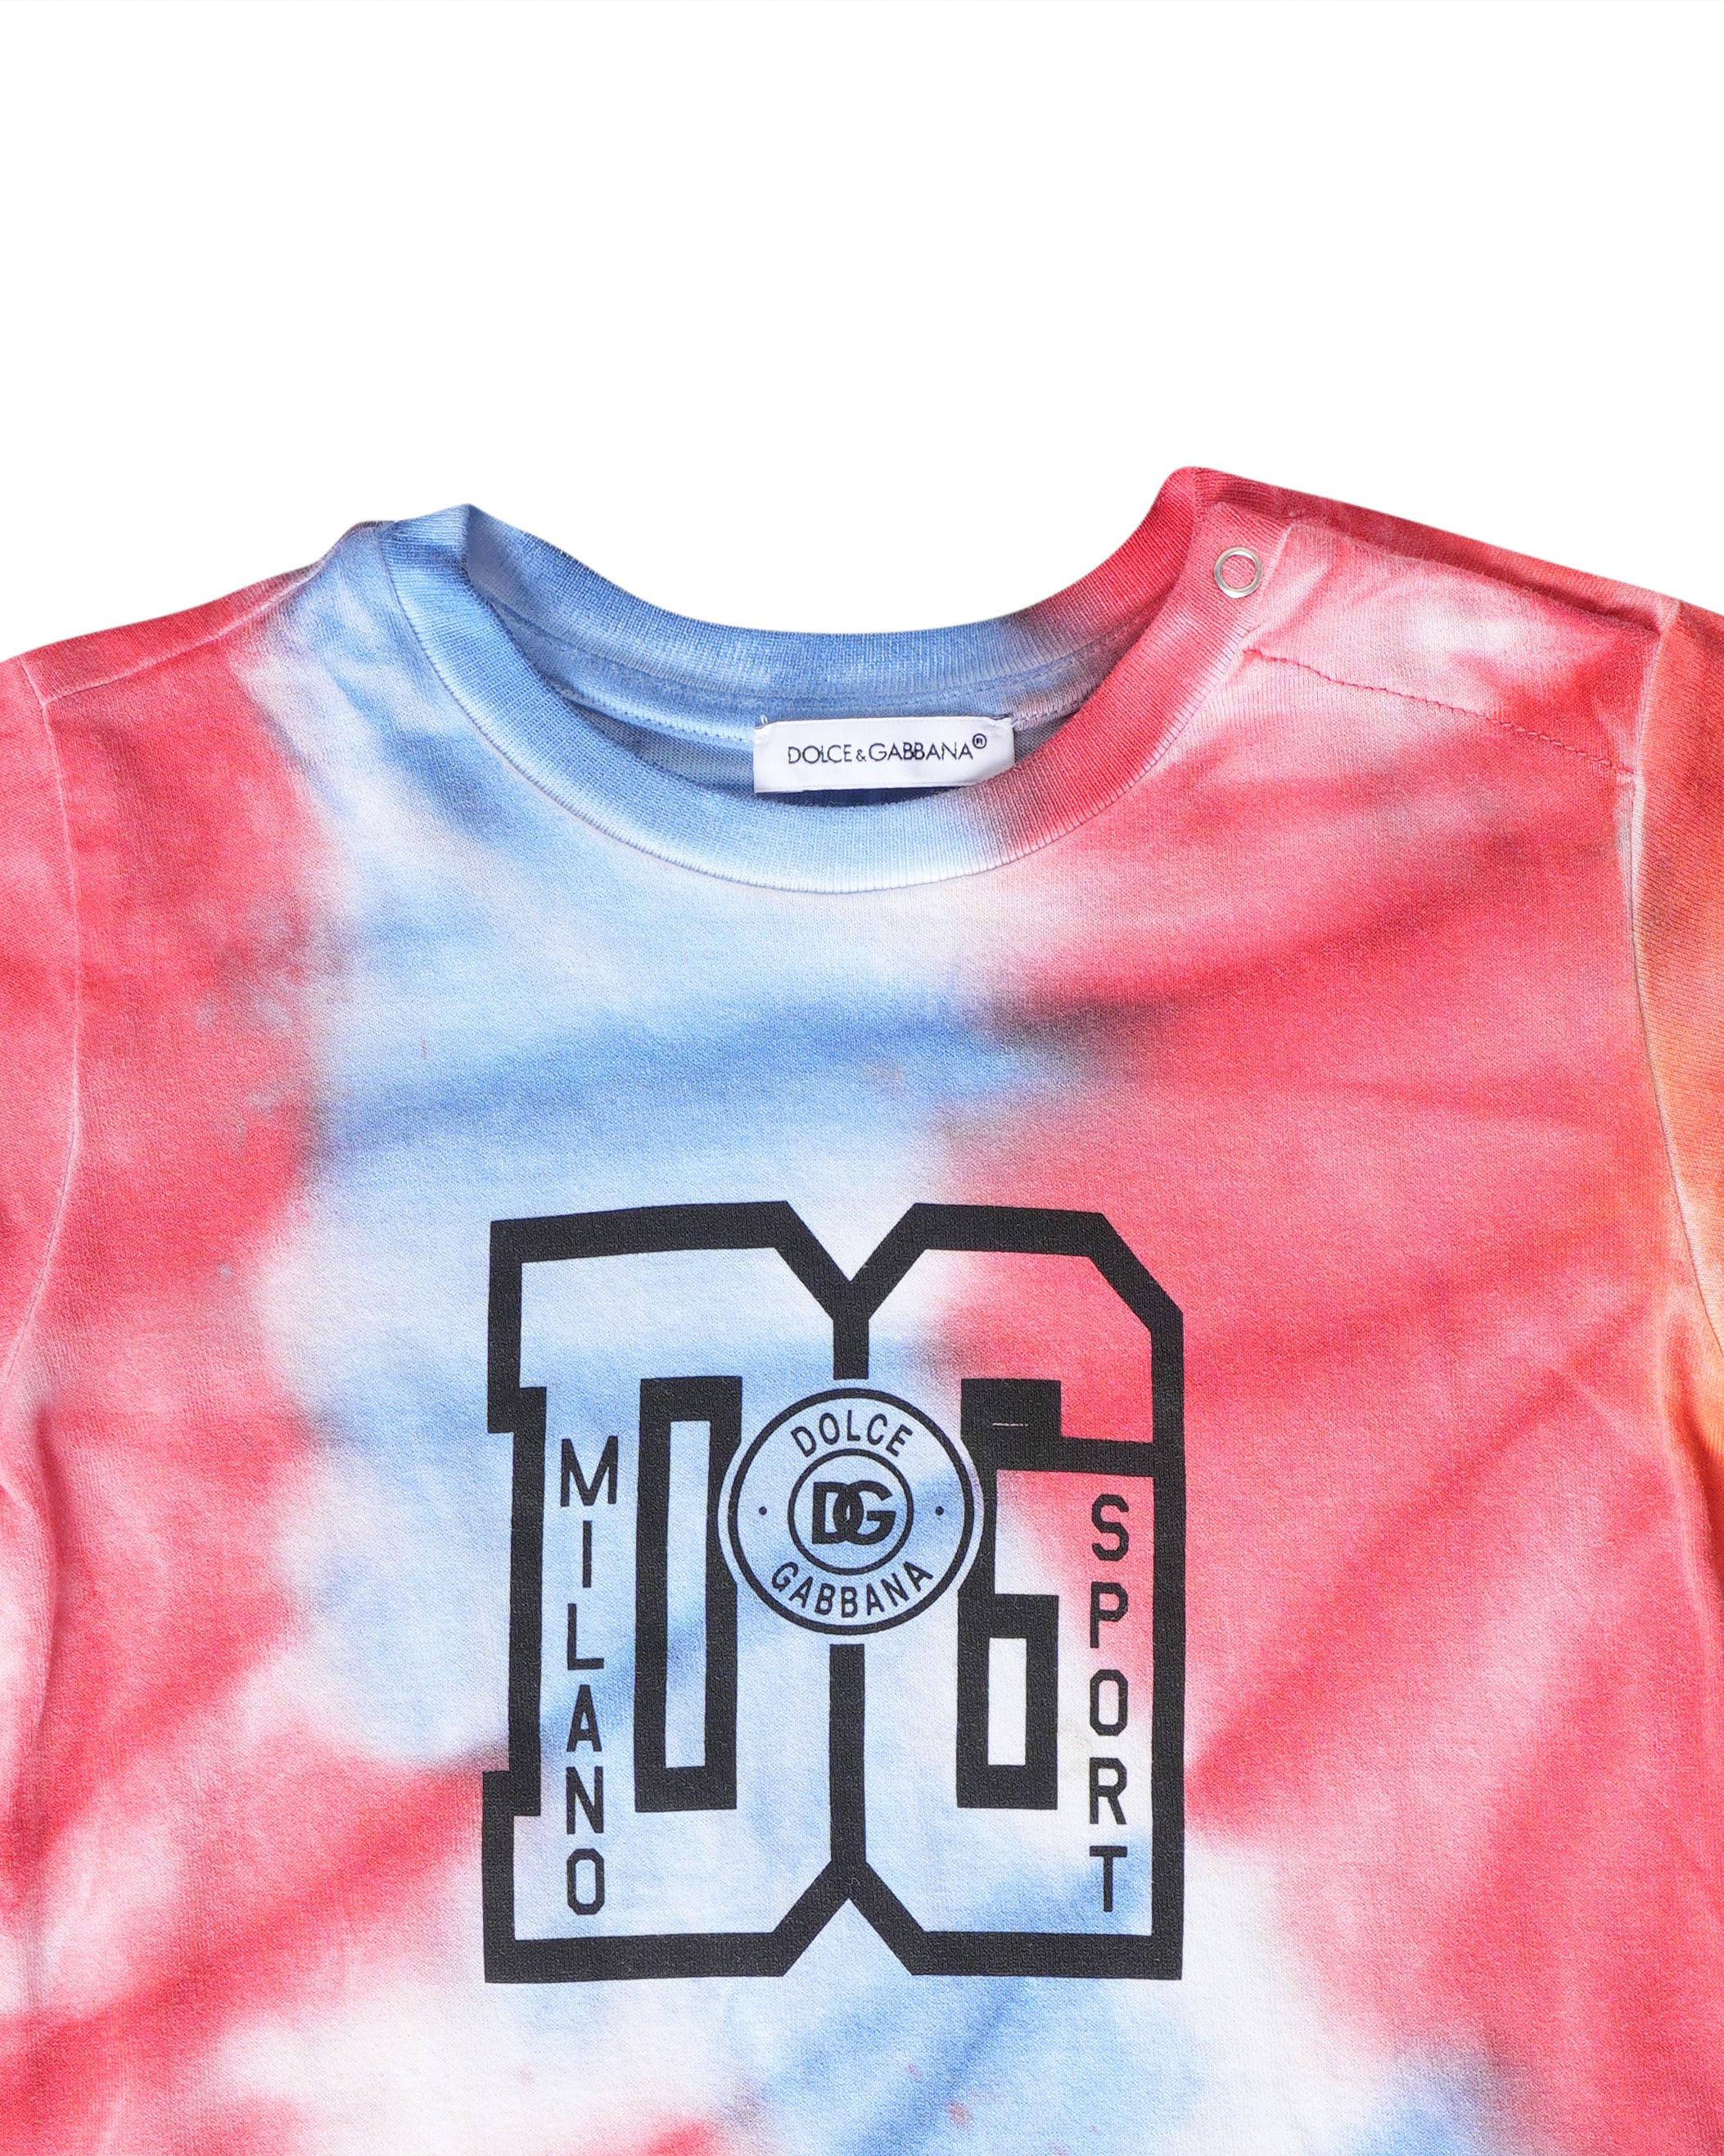 Dolce & Gabbana Tye Dye T-Shirt